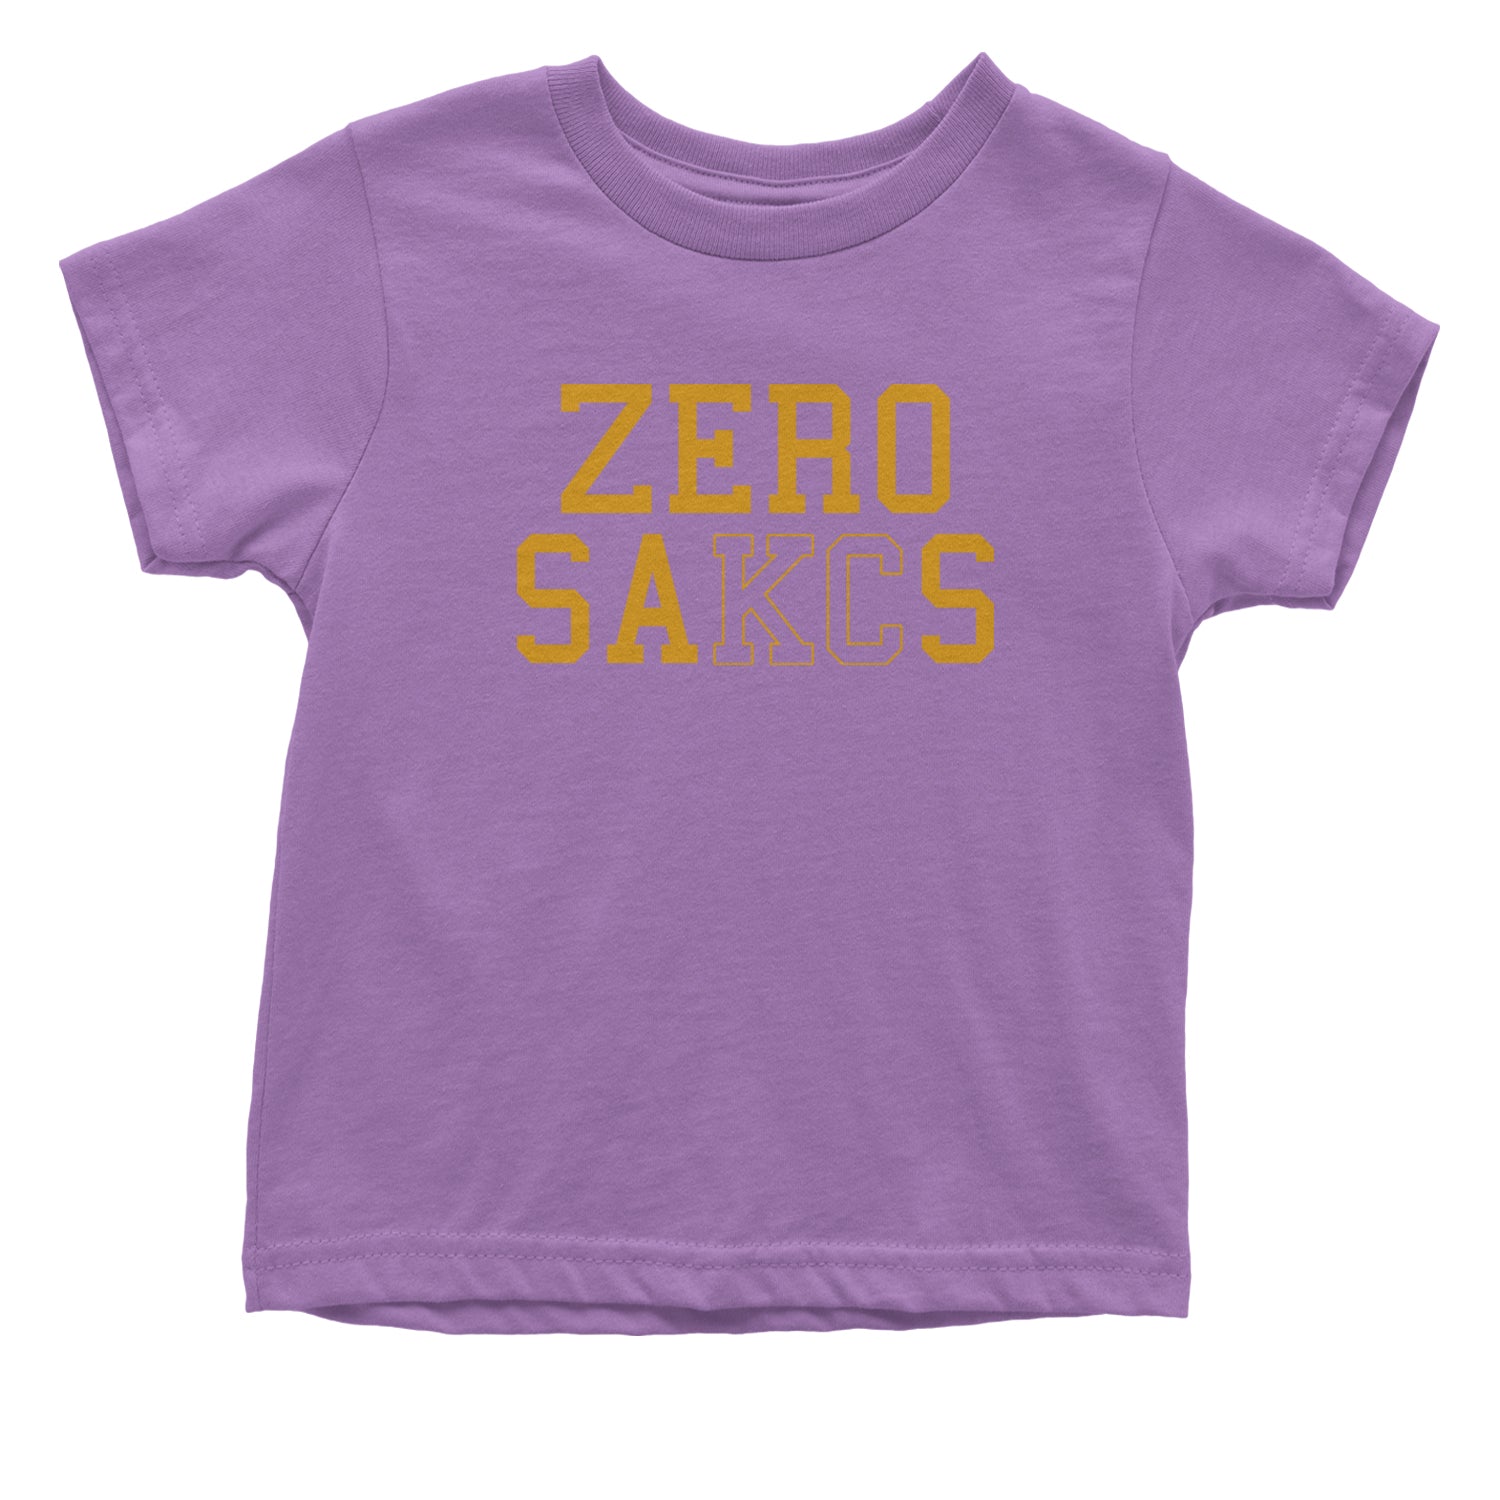 Zero Sacks Kansas City Infant One-Piece Romper Bodysuit and Toddler T-shirt ball, brown, foot, football, kelc, orlando, patrick, sacks, sakcs by Expression Tees